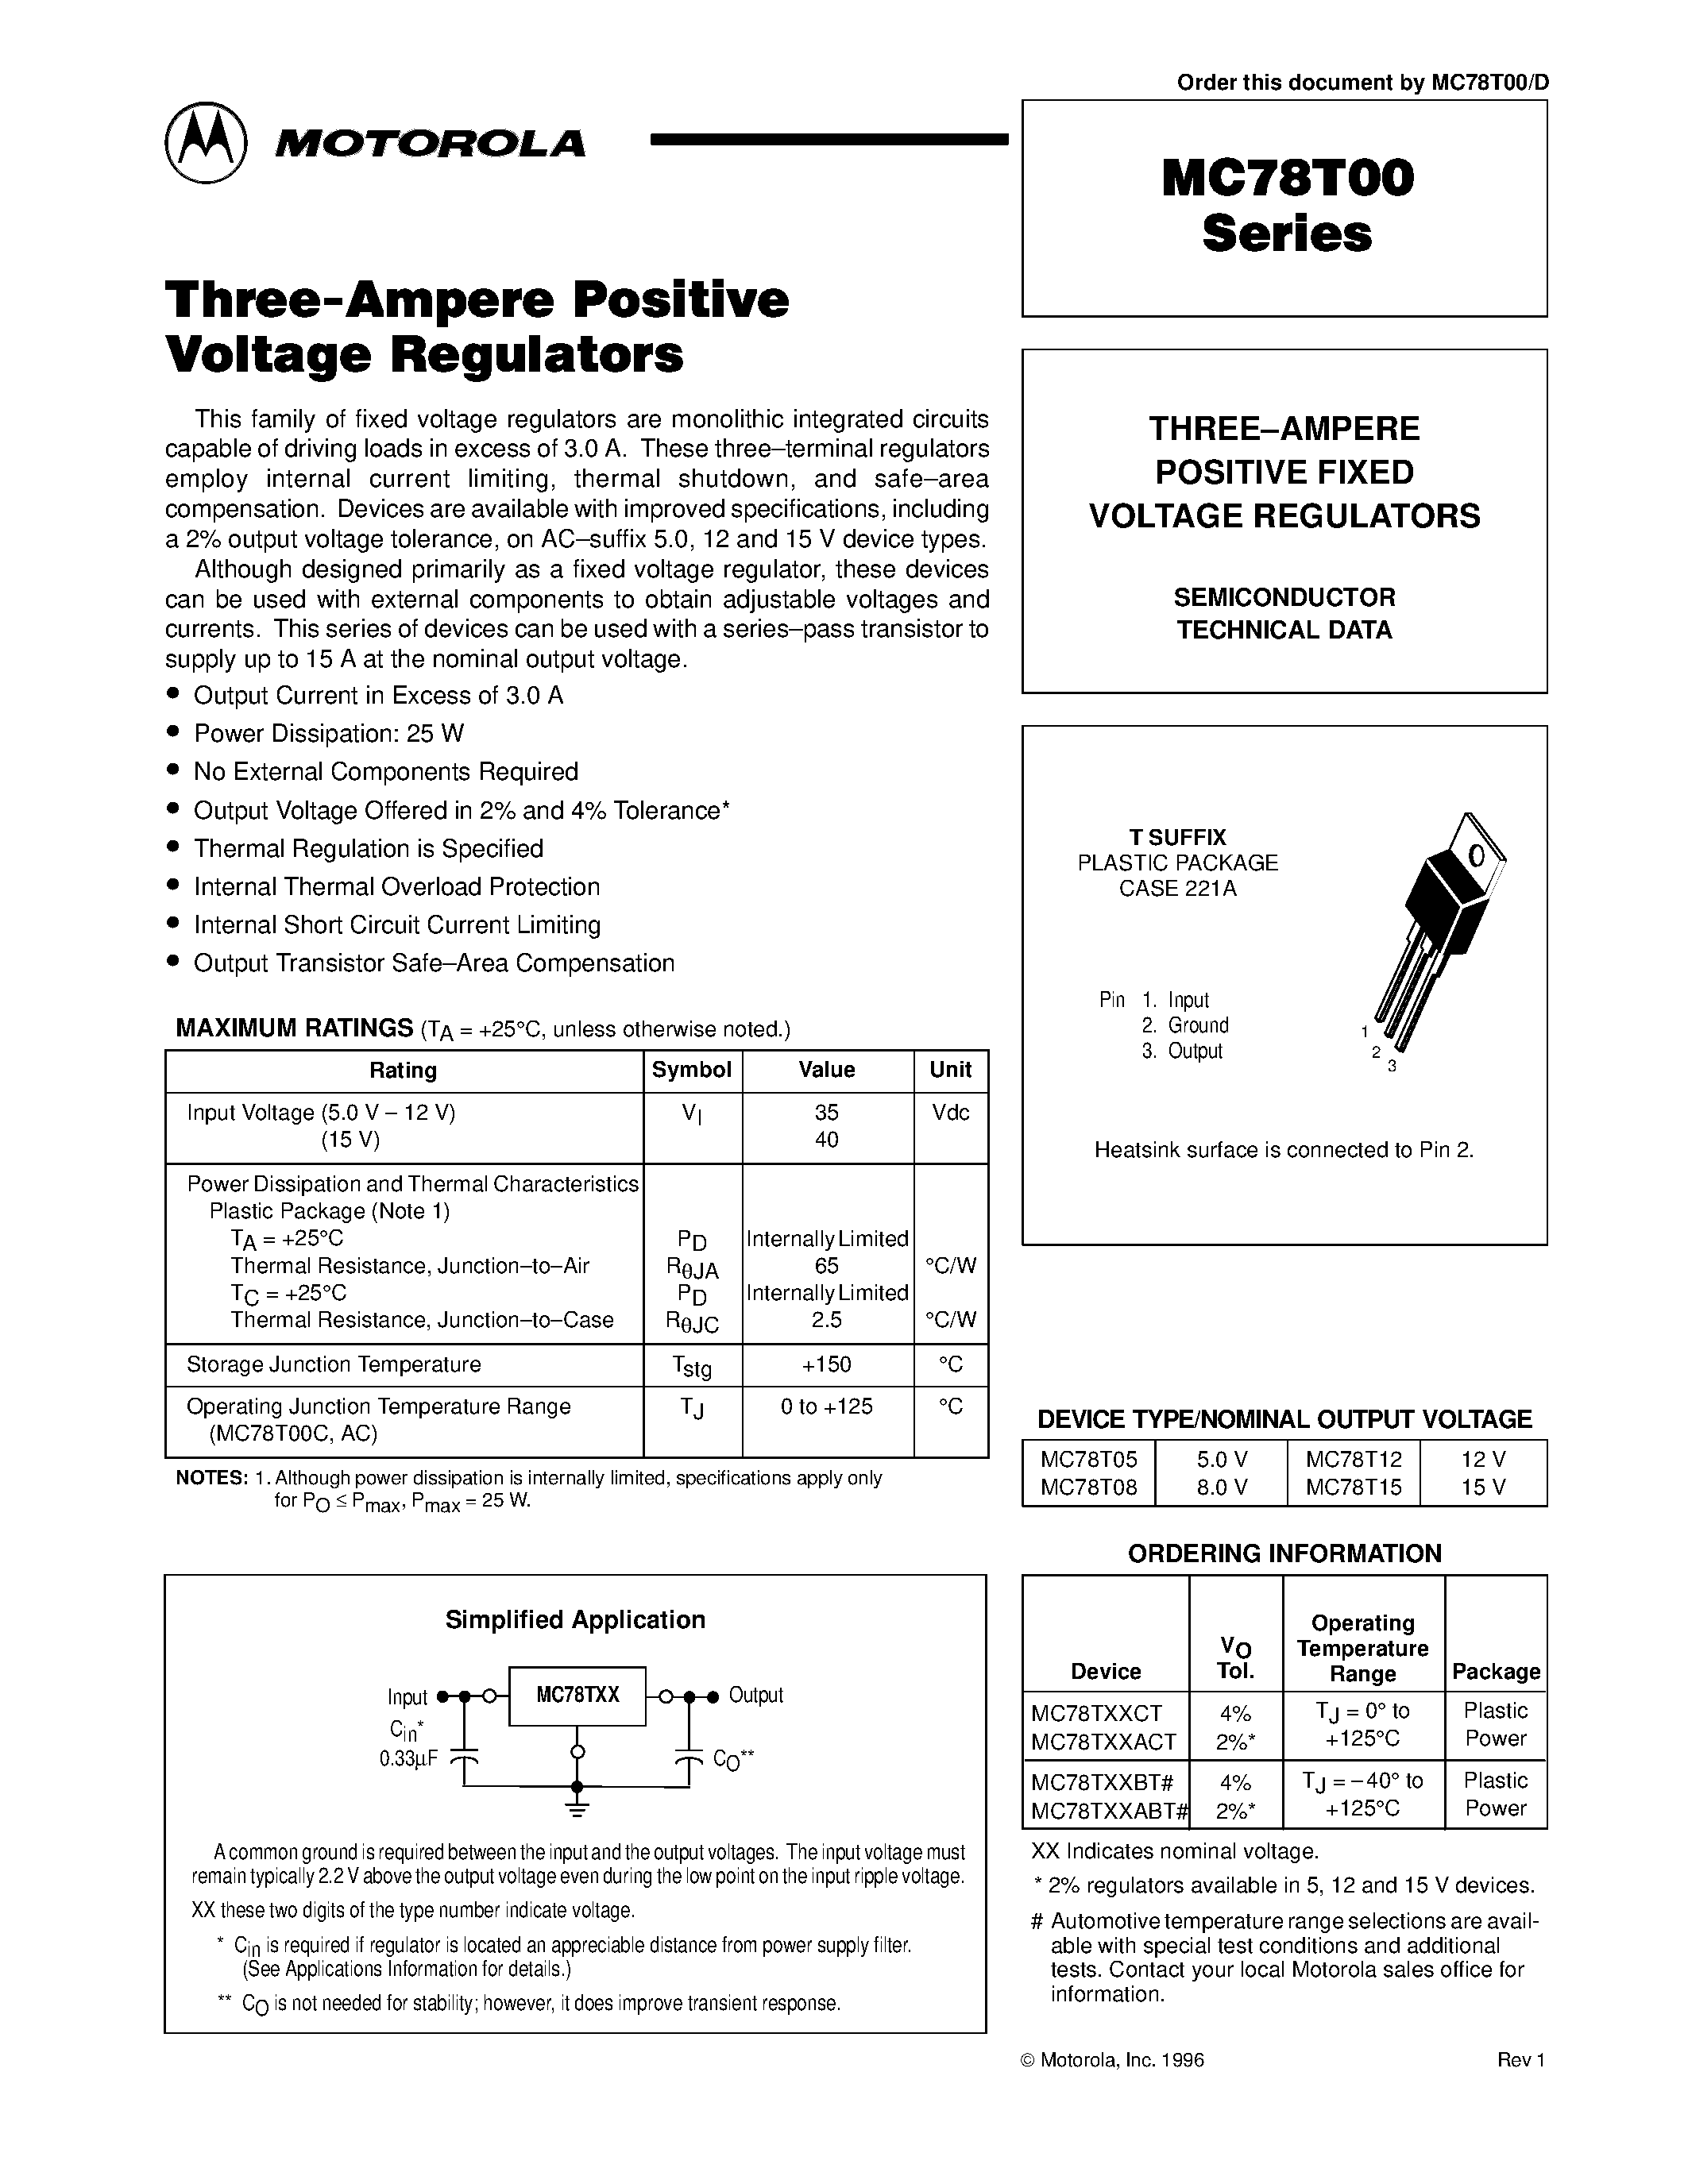 Datasheet MC78T12C - THREE-AMPERE POSITIVE FIXED VOLTAGE REGULATORS page 1